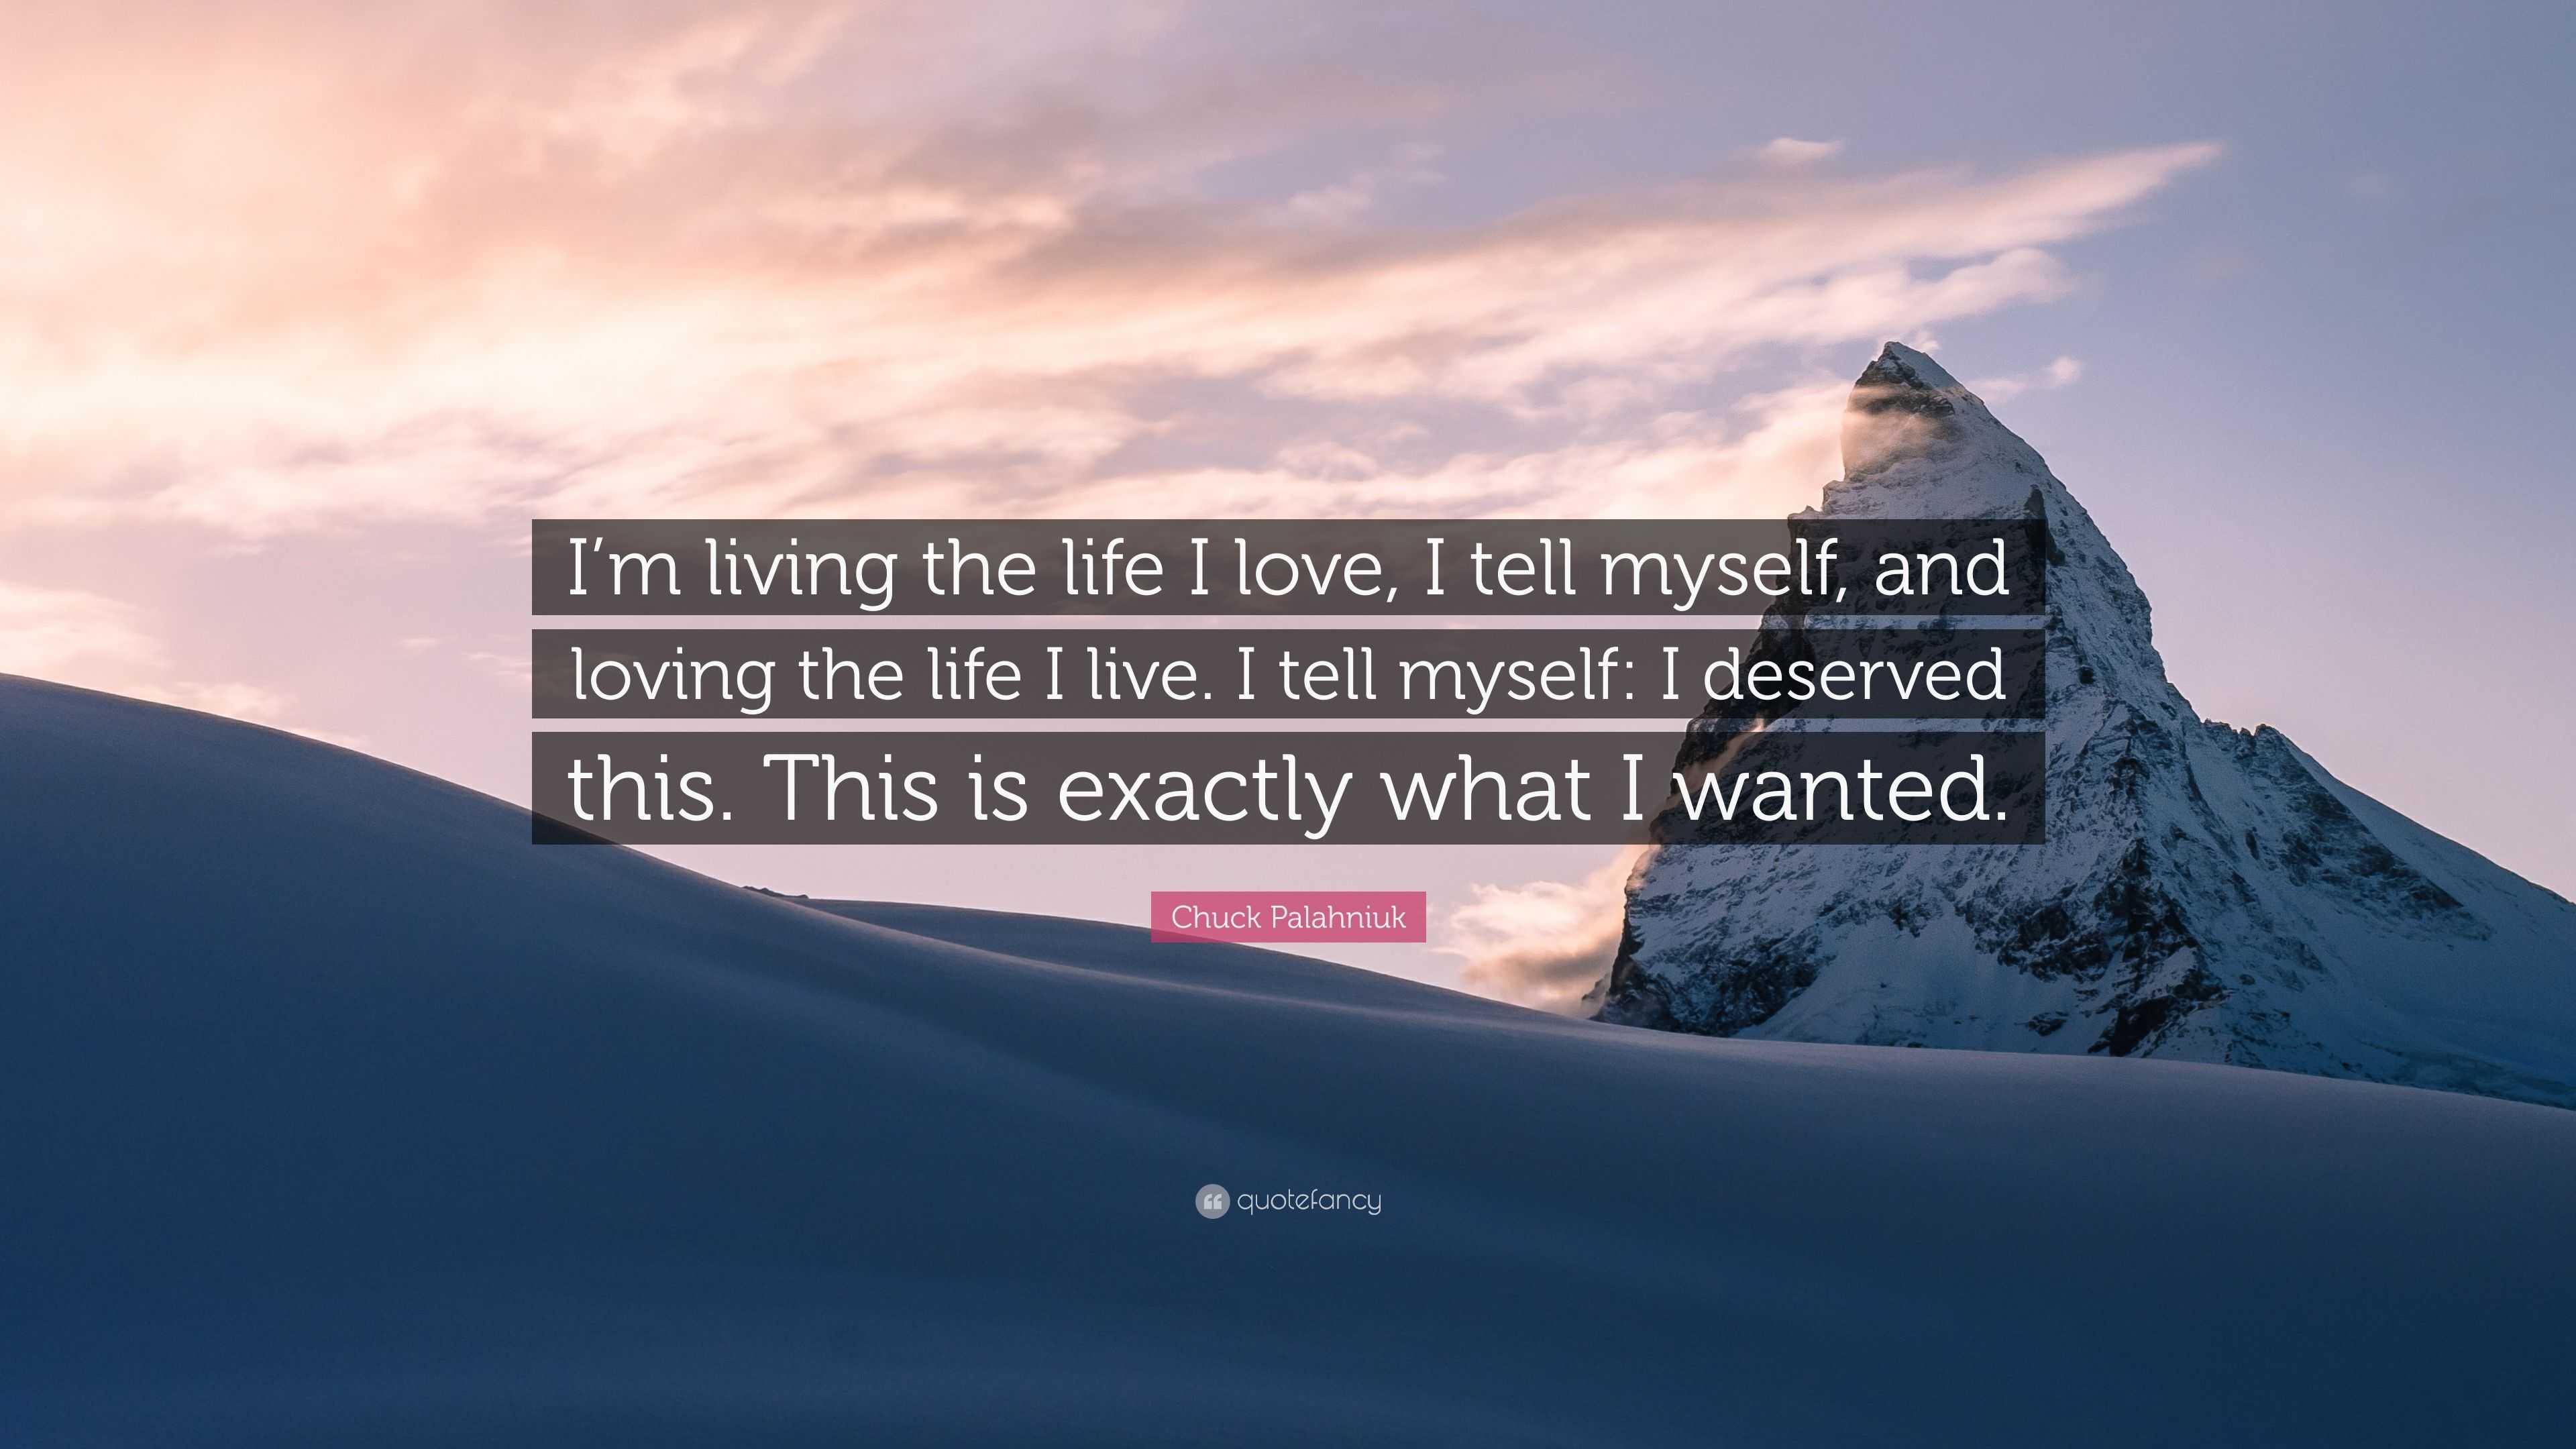 Chuck Palahniuk Quote “I m living the life I love I tell